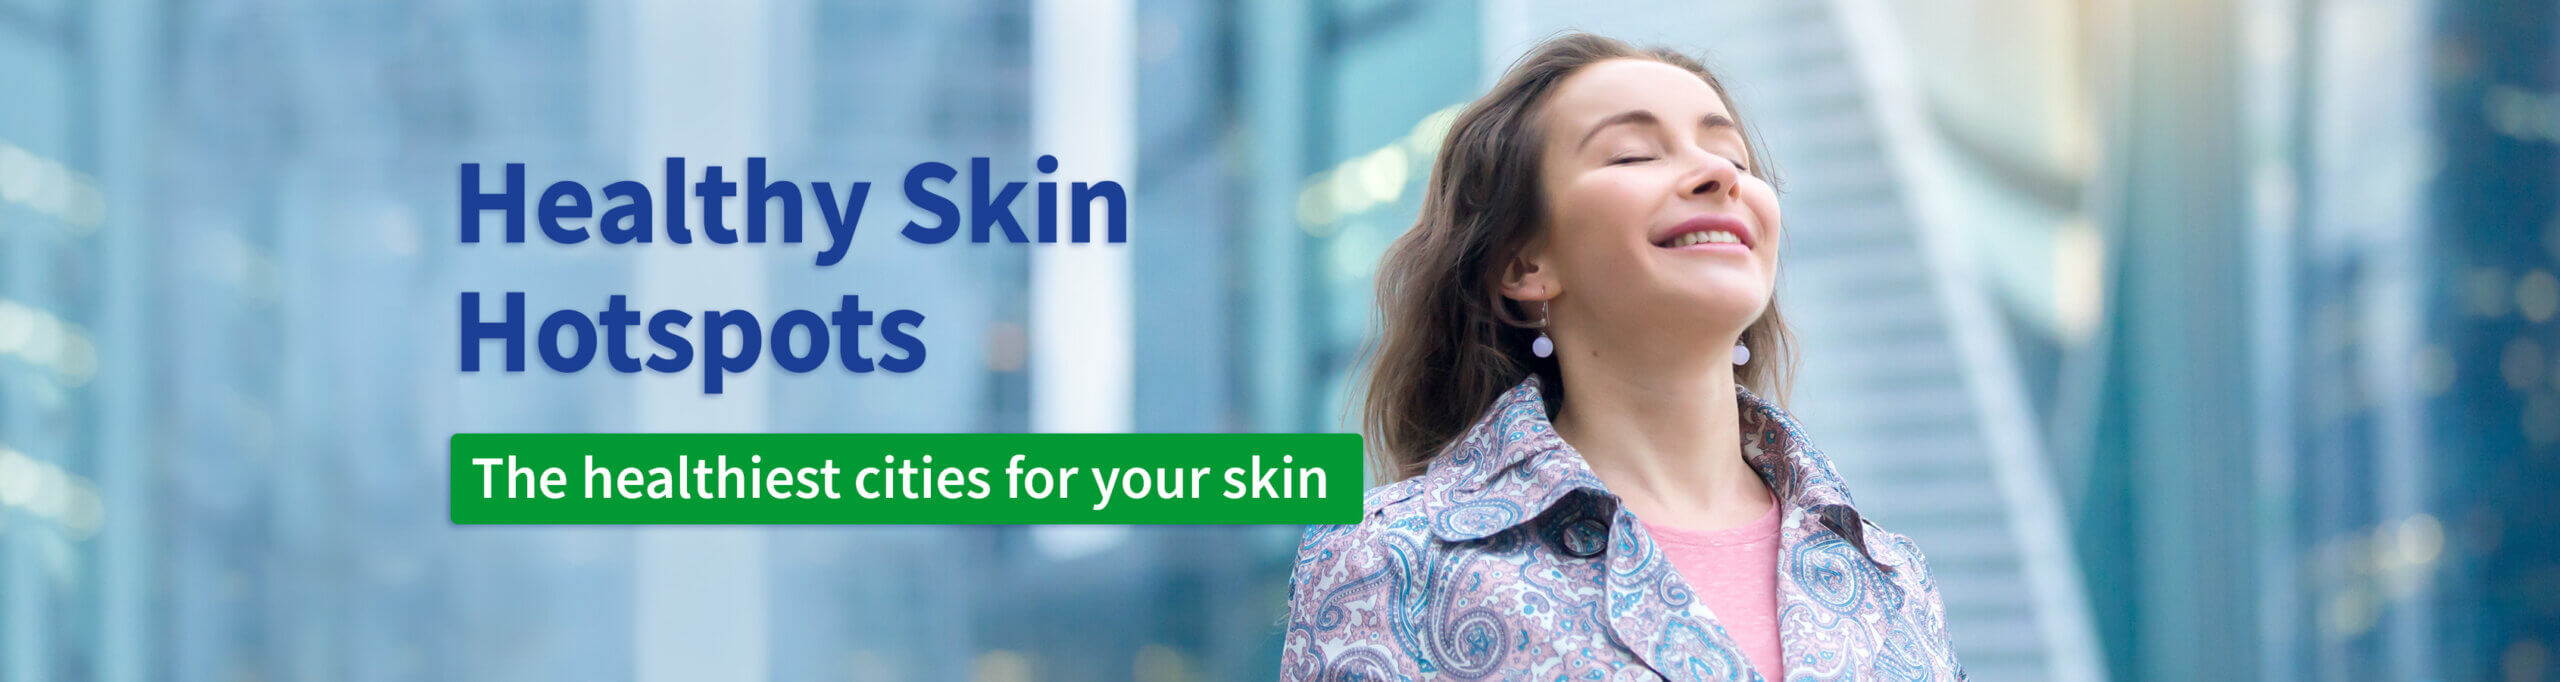 Healthy Skin Hotspots main header image